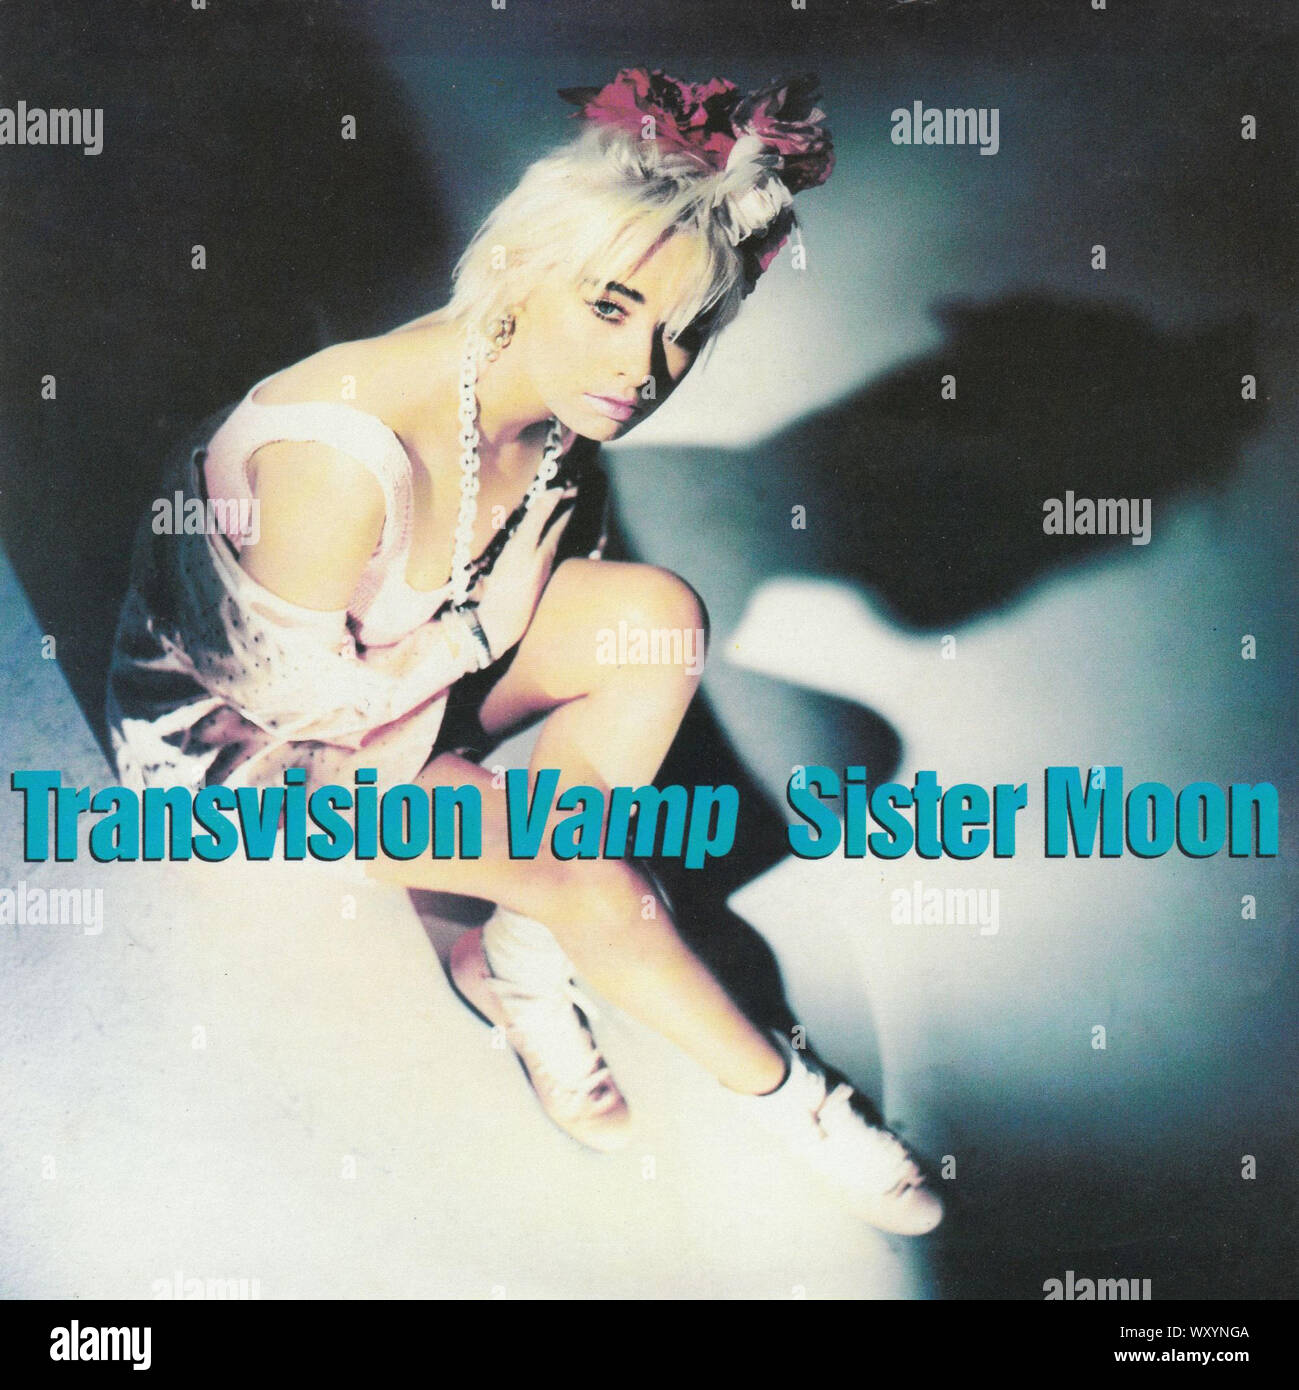 Sister moon. Transvision Vamp группа. The Moon sister. Transvision Vamp Baby i don't Care.